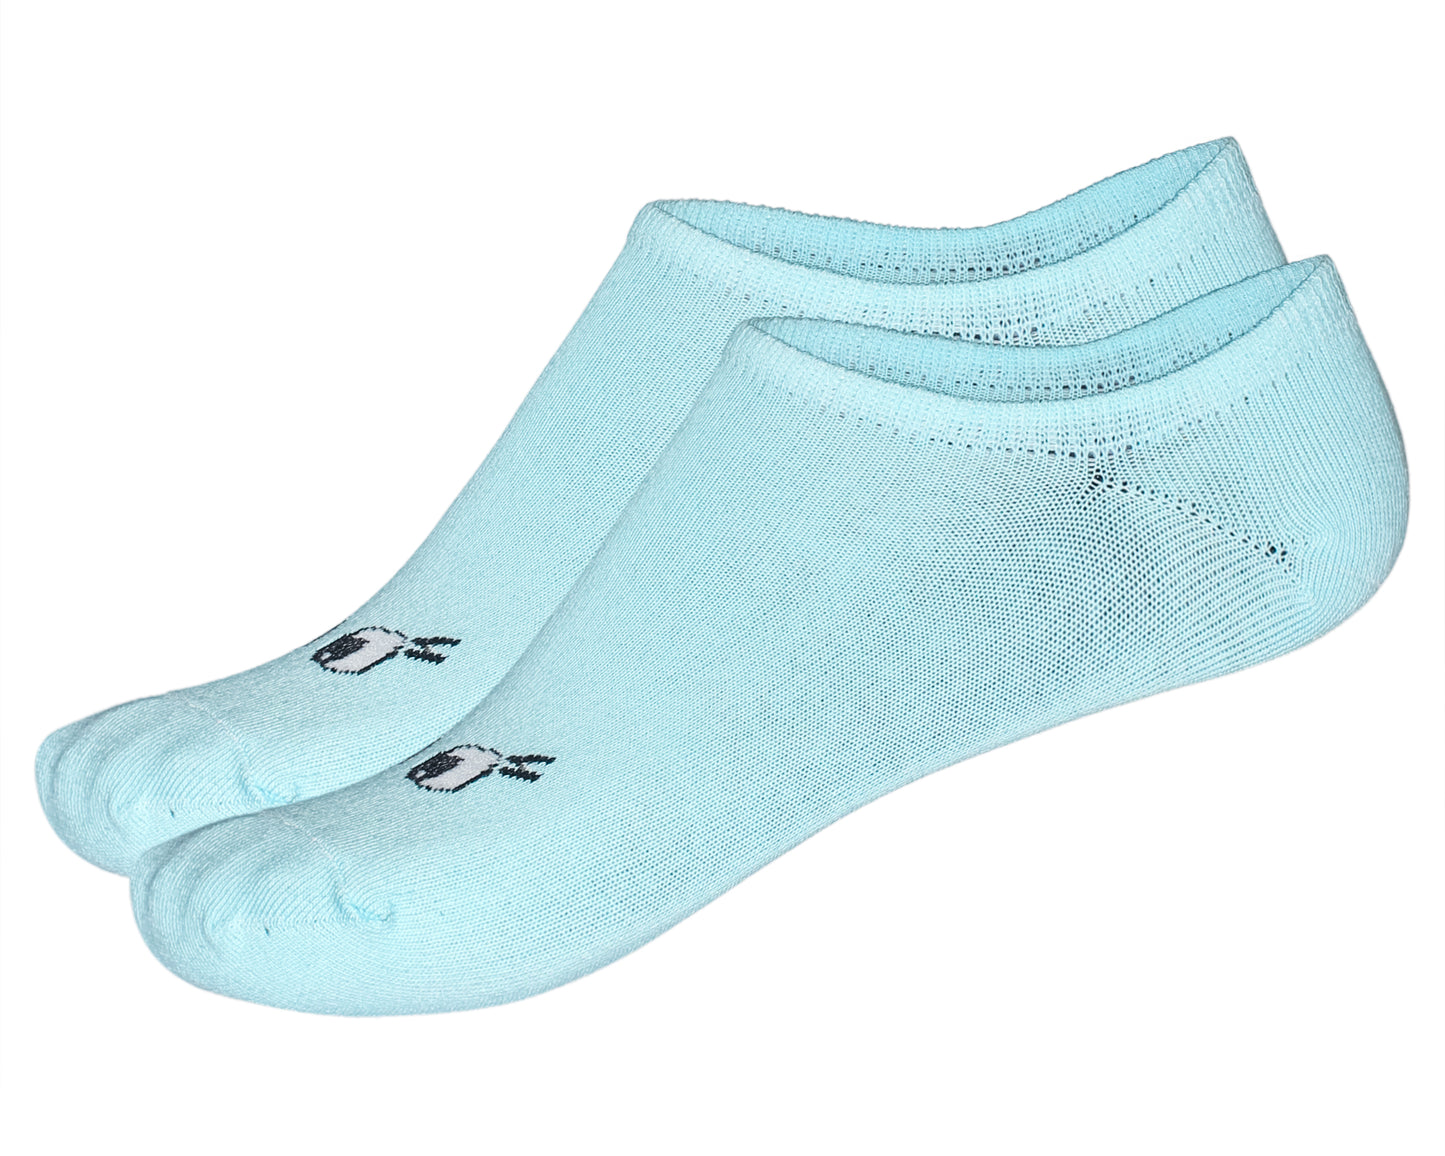 Astro Socks The Eyes Chico - Blue Ankle Socks